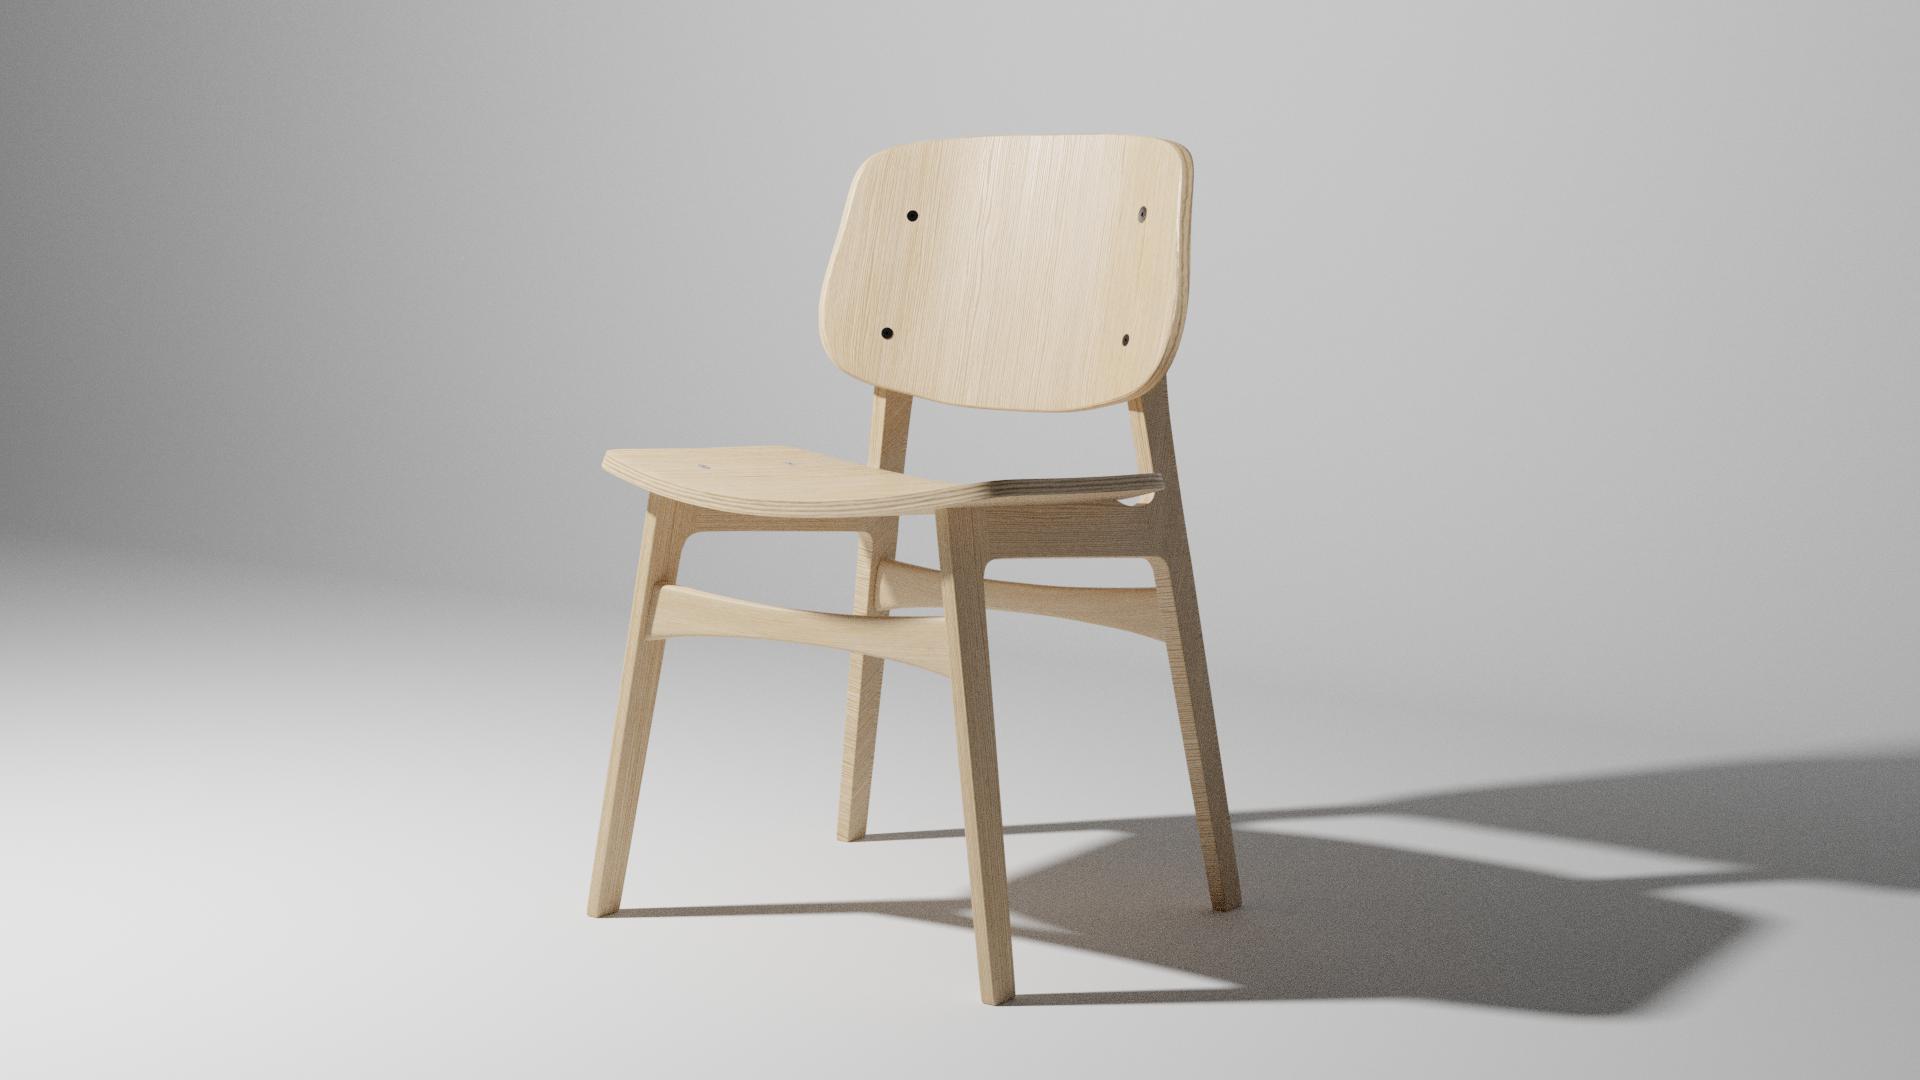 Chair made - Blender